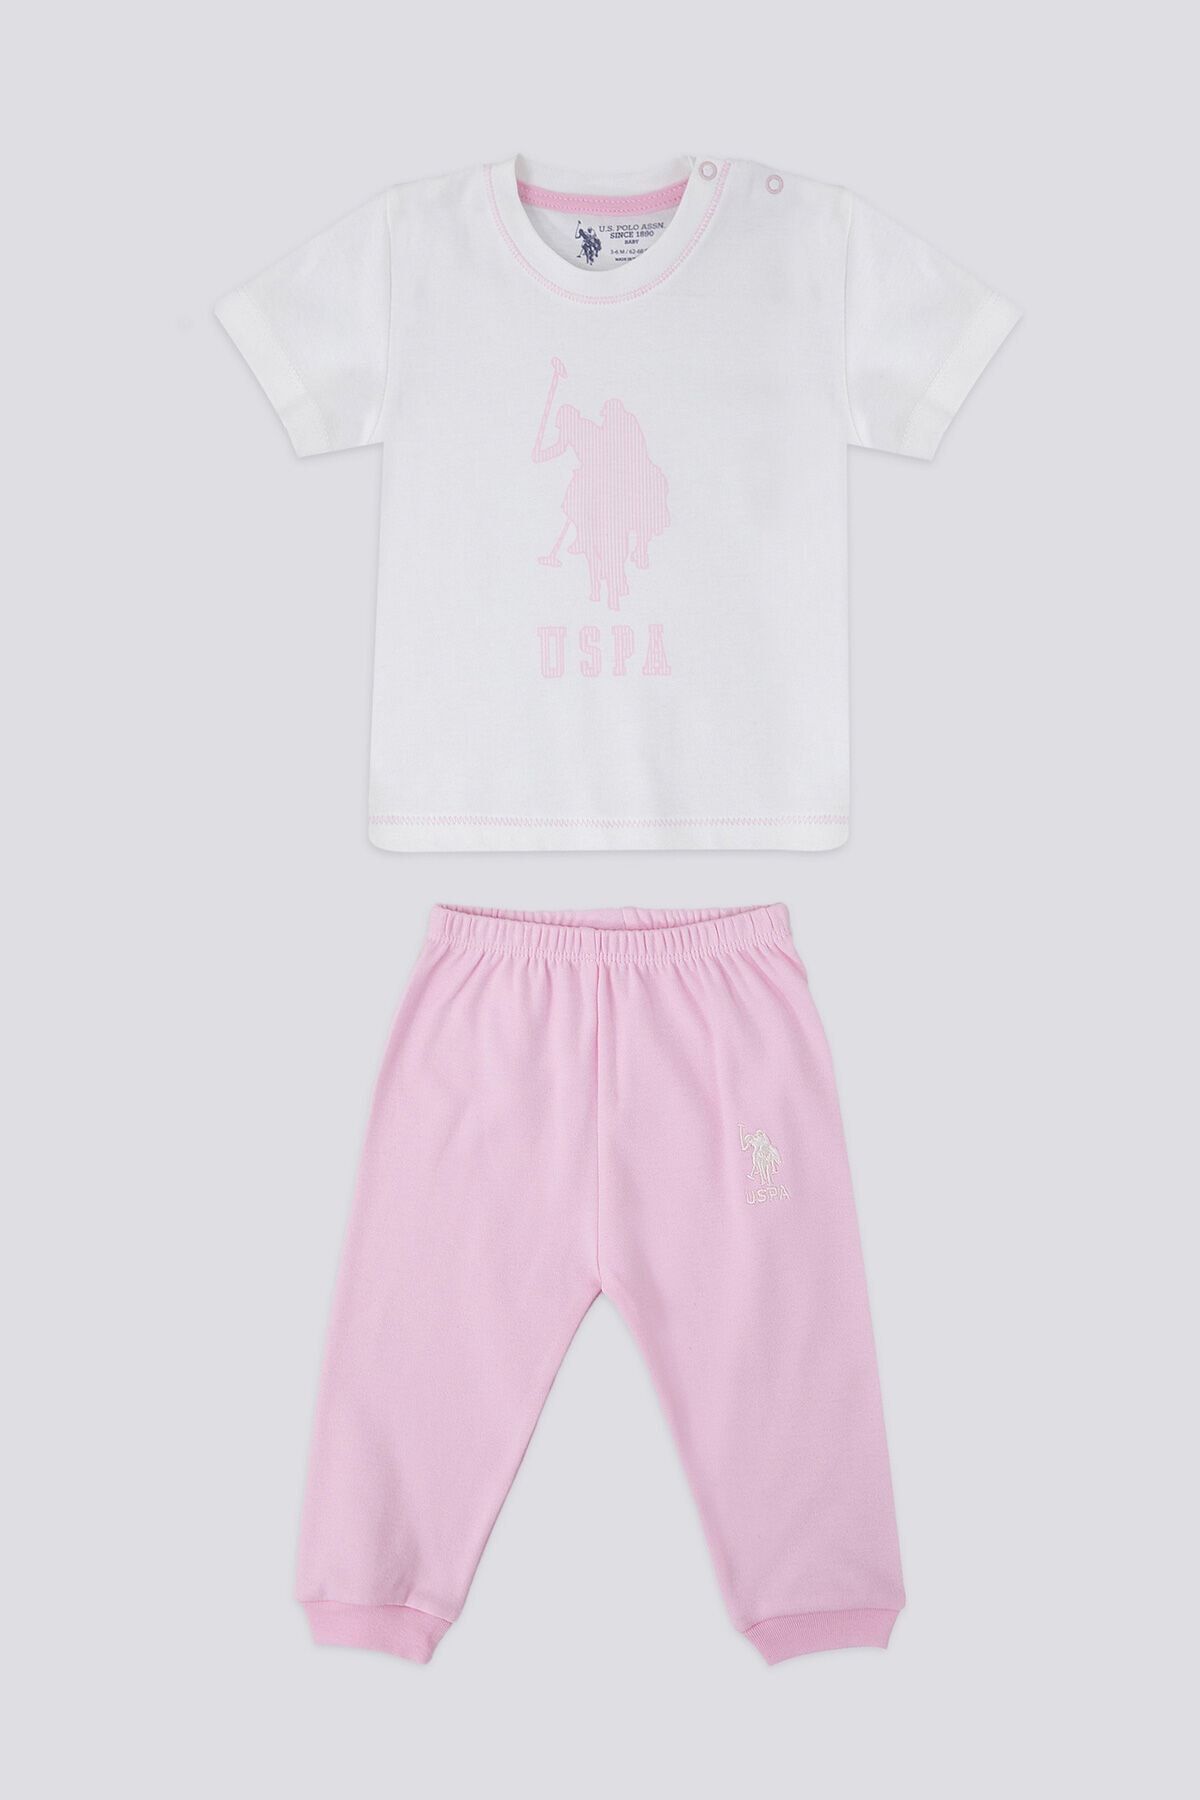 U.S. Polo Assn. Light Tones Pink Krem Bebek Tshirt Takım